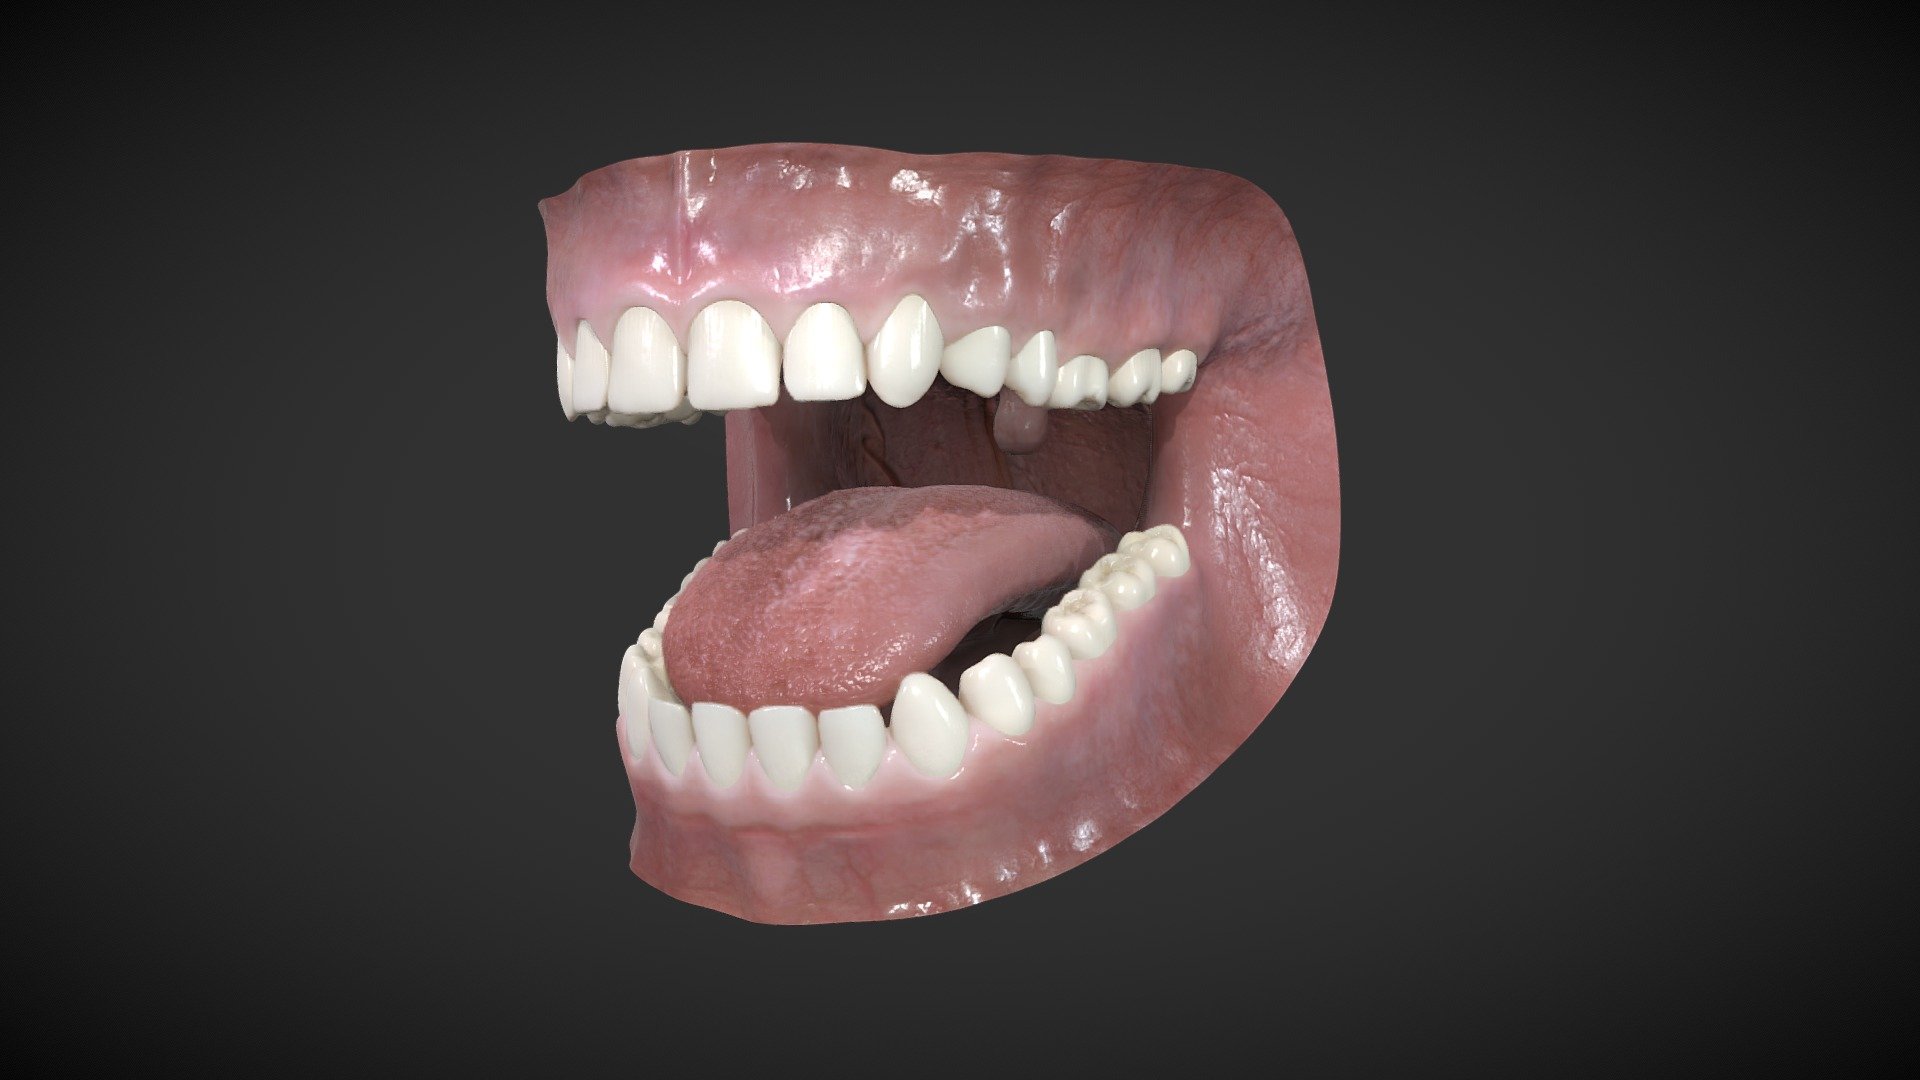 Base model of a mouth made in Blender 2.93 - Mouth Model 2021 - 3D model by Jim Morren (@journeyman) 3d model